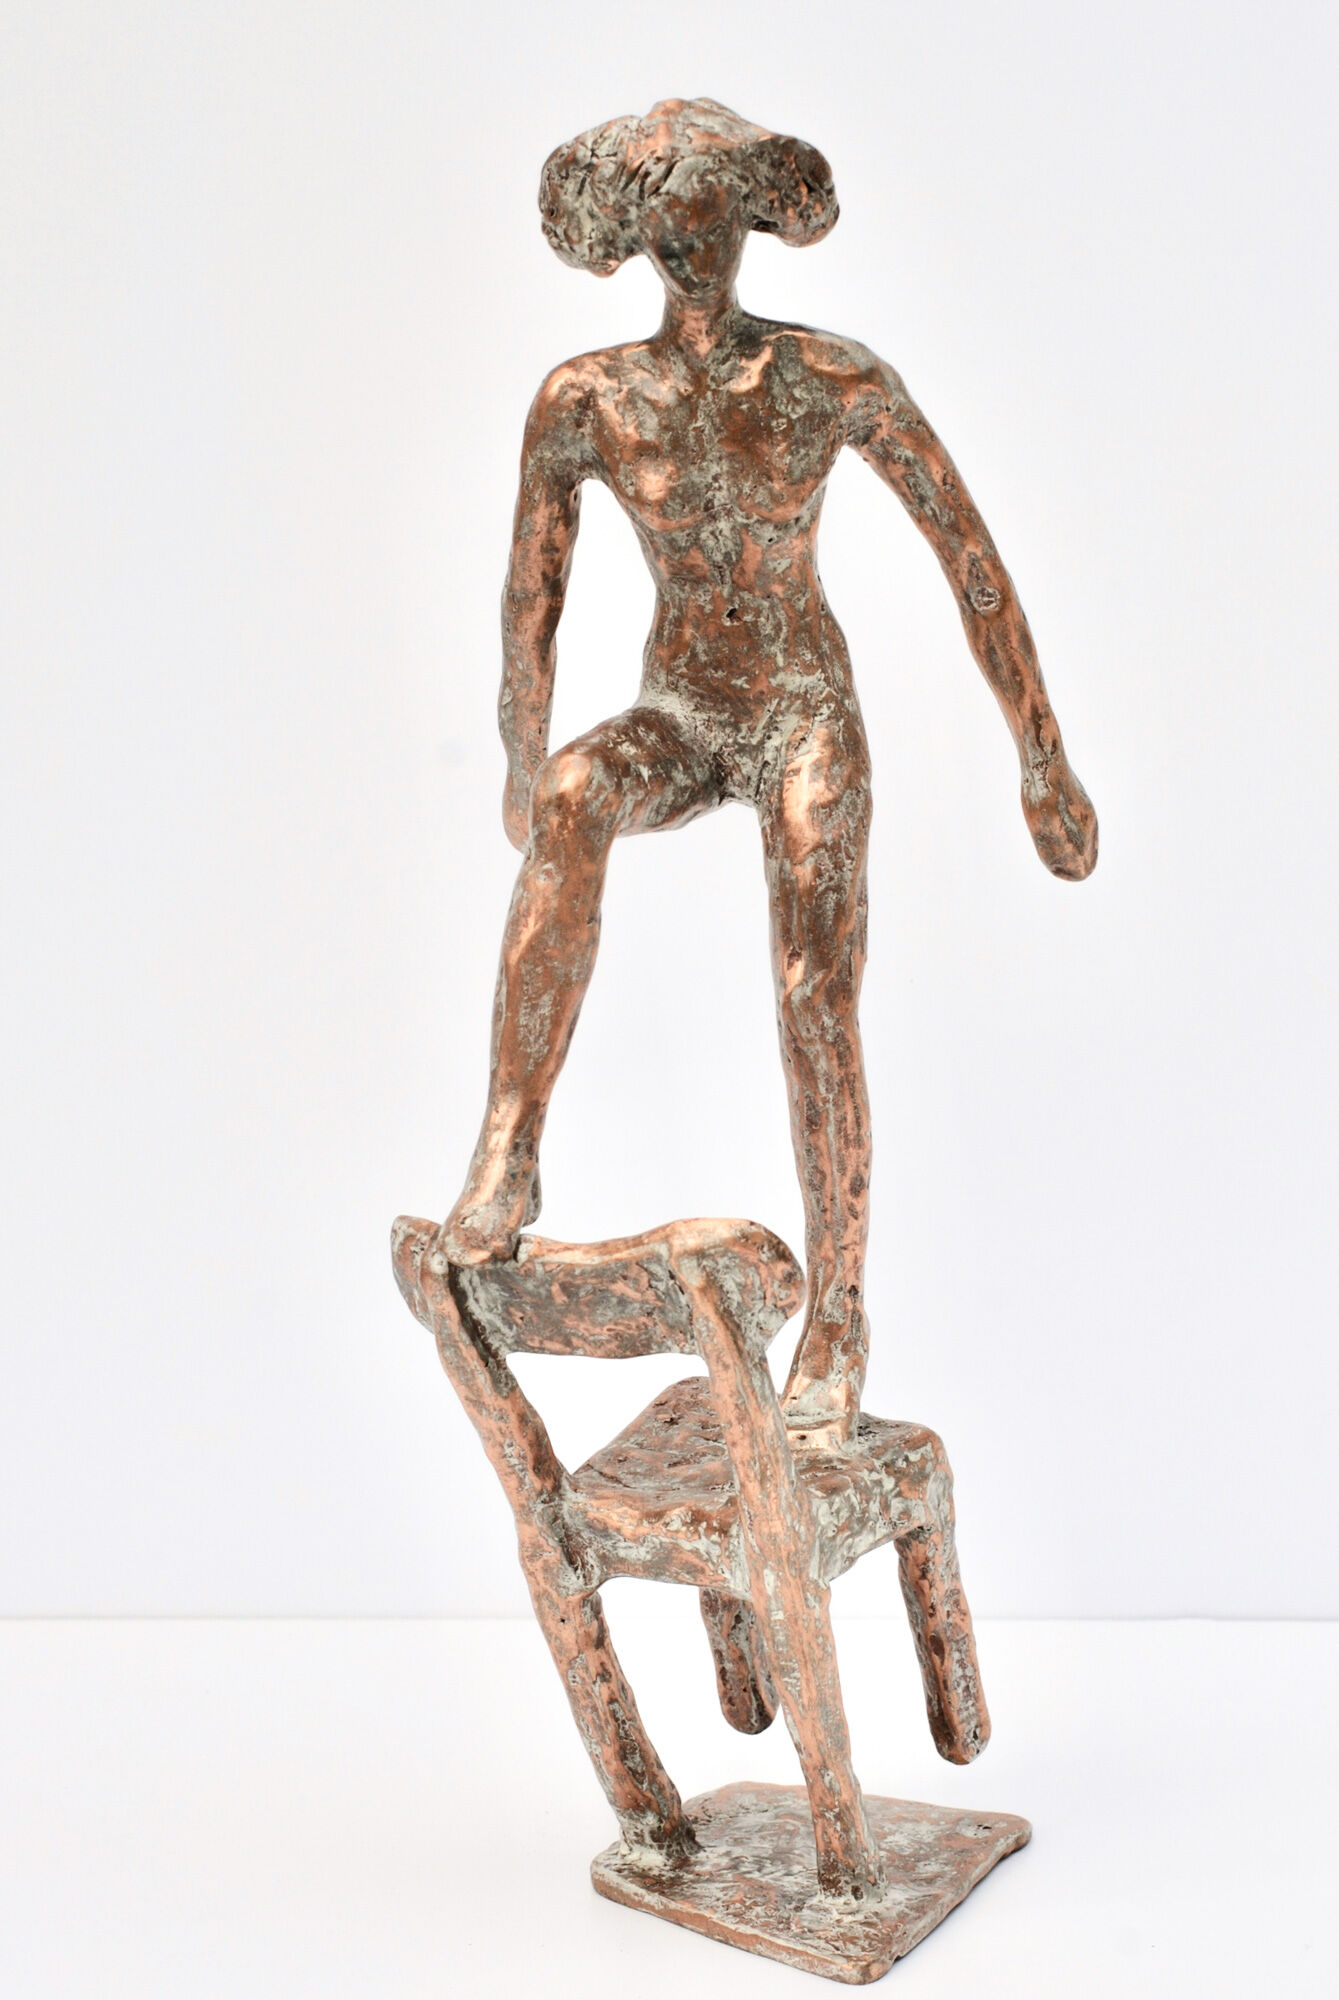 Sculpture "Pina - Joy" (2019), bronze by Dagmar Vogt